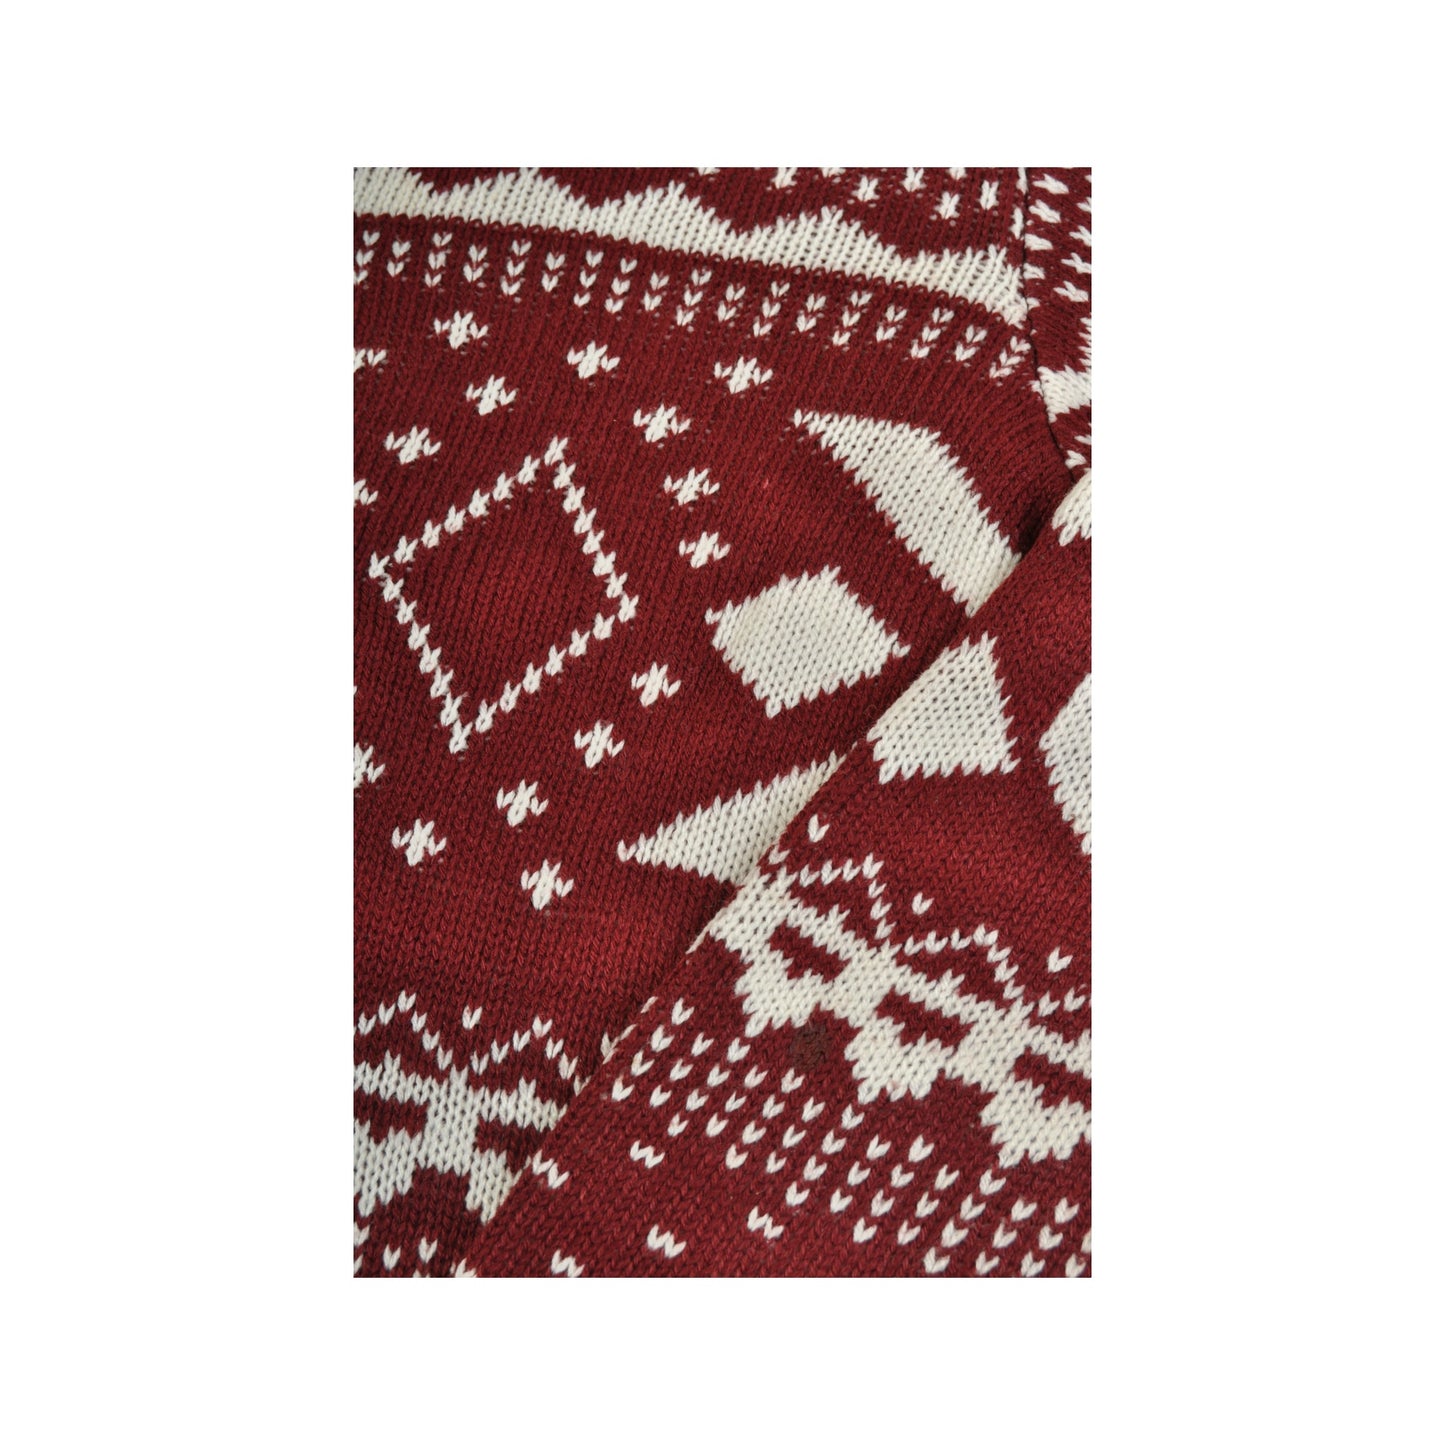 Vintage Knitted Jumper Retro Snowflake Pattern Red/White Ladies Medium